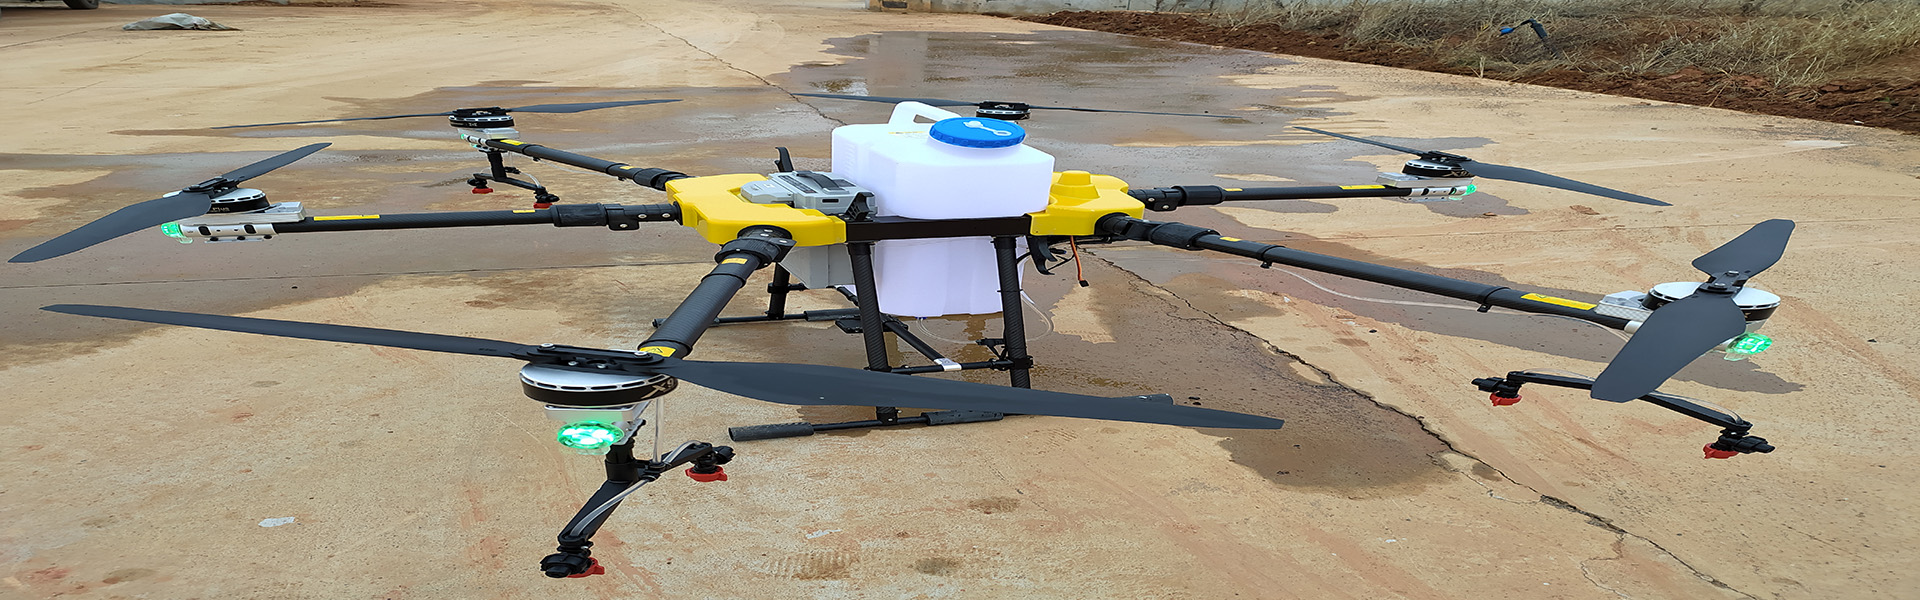 UAV agricol, protecția plantelor UAV, accesorii UAV agricole,Shenzhen fnyuav technology co.LTD